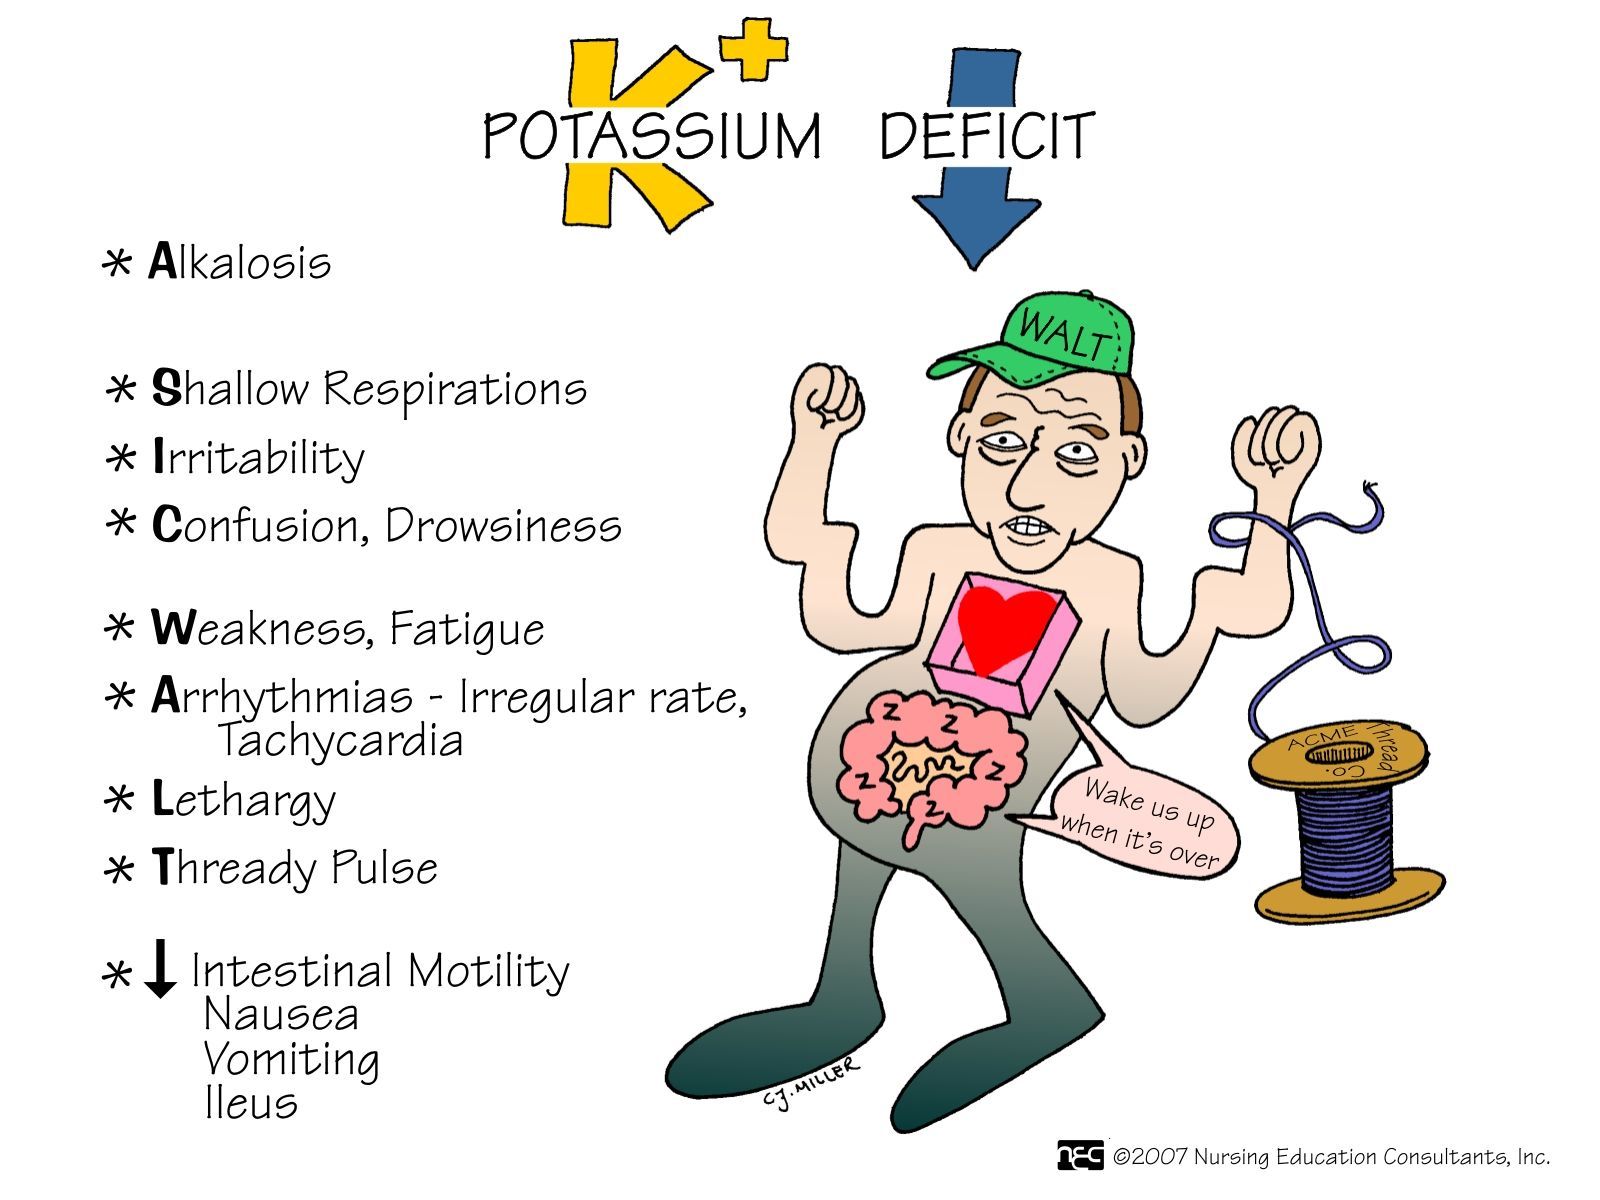 Potassium Deficit | Nursing Mnemonics and Tips